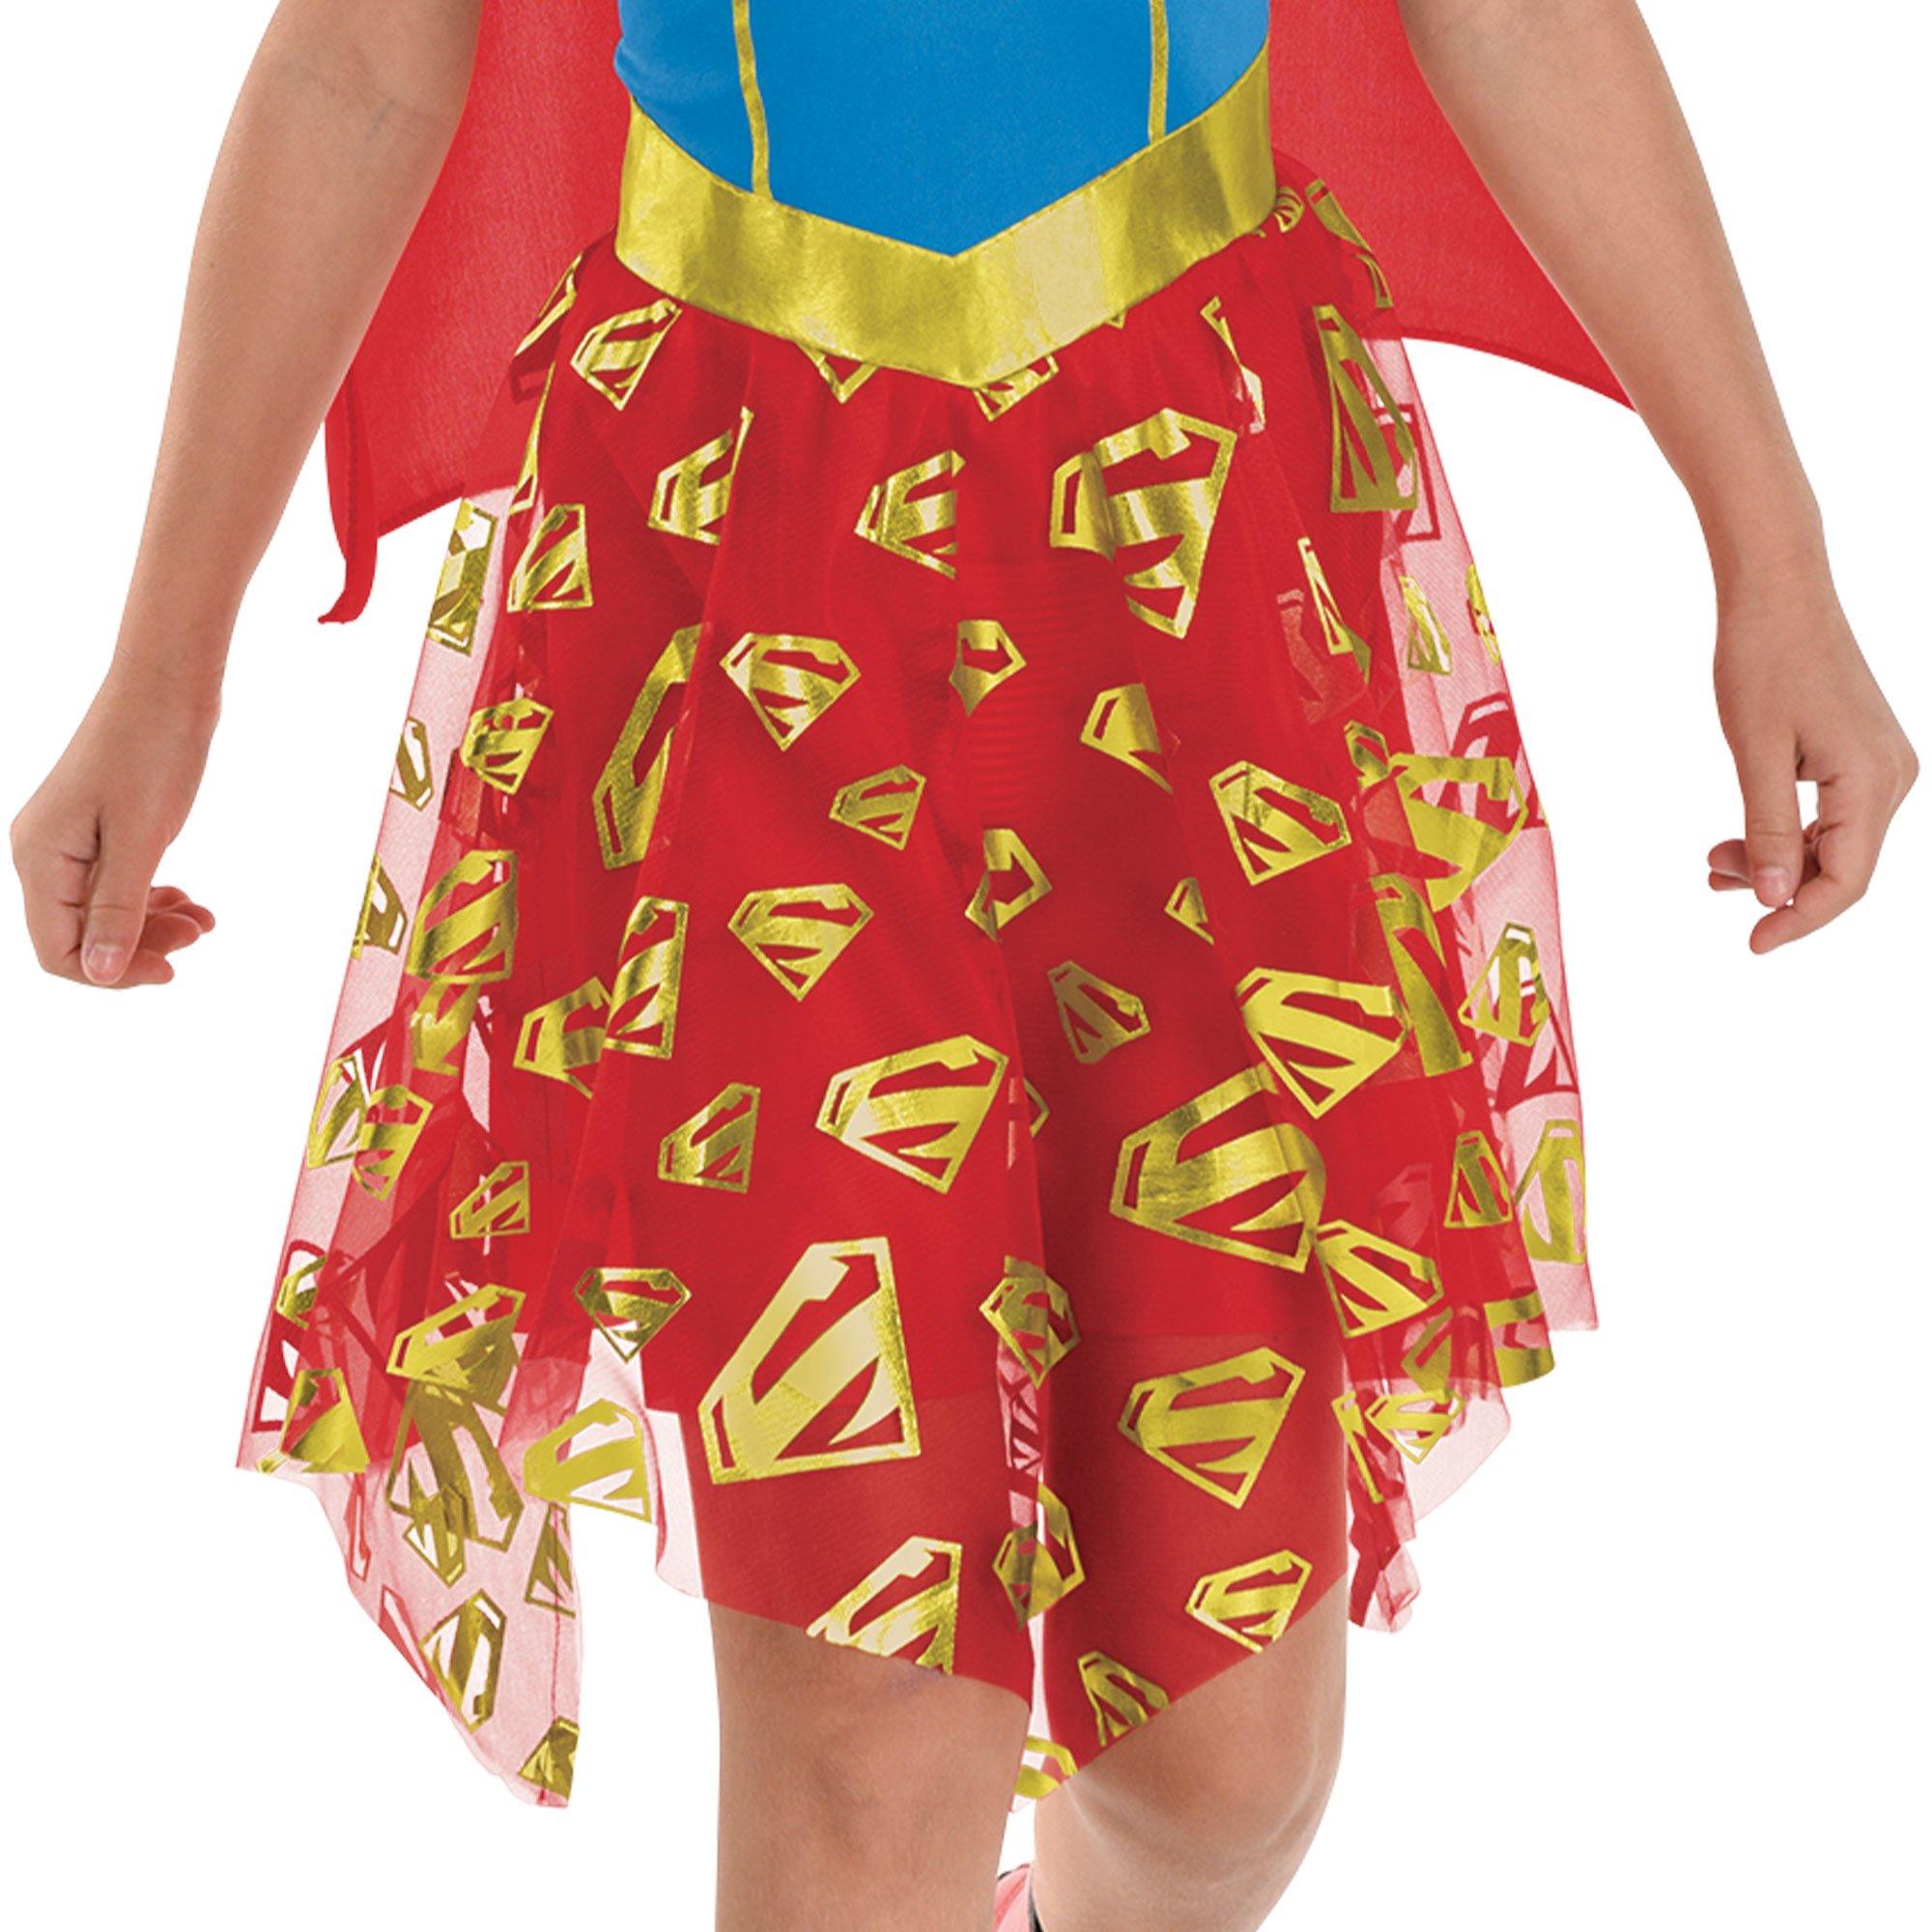 Kids' Glitter Supergirl Dress Costume - DC Comics